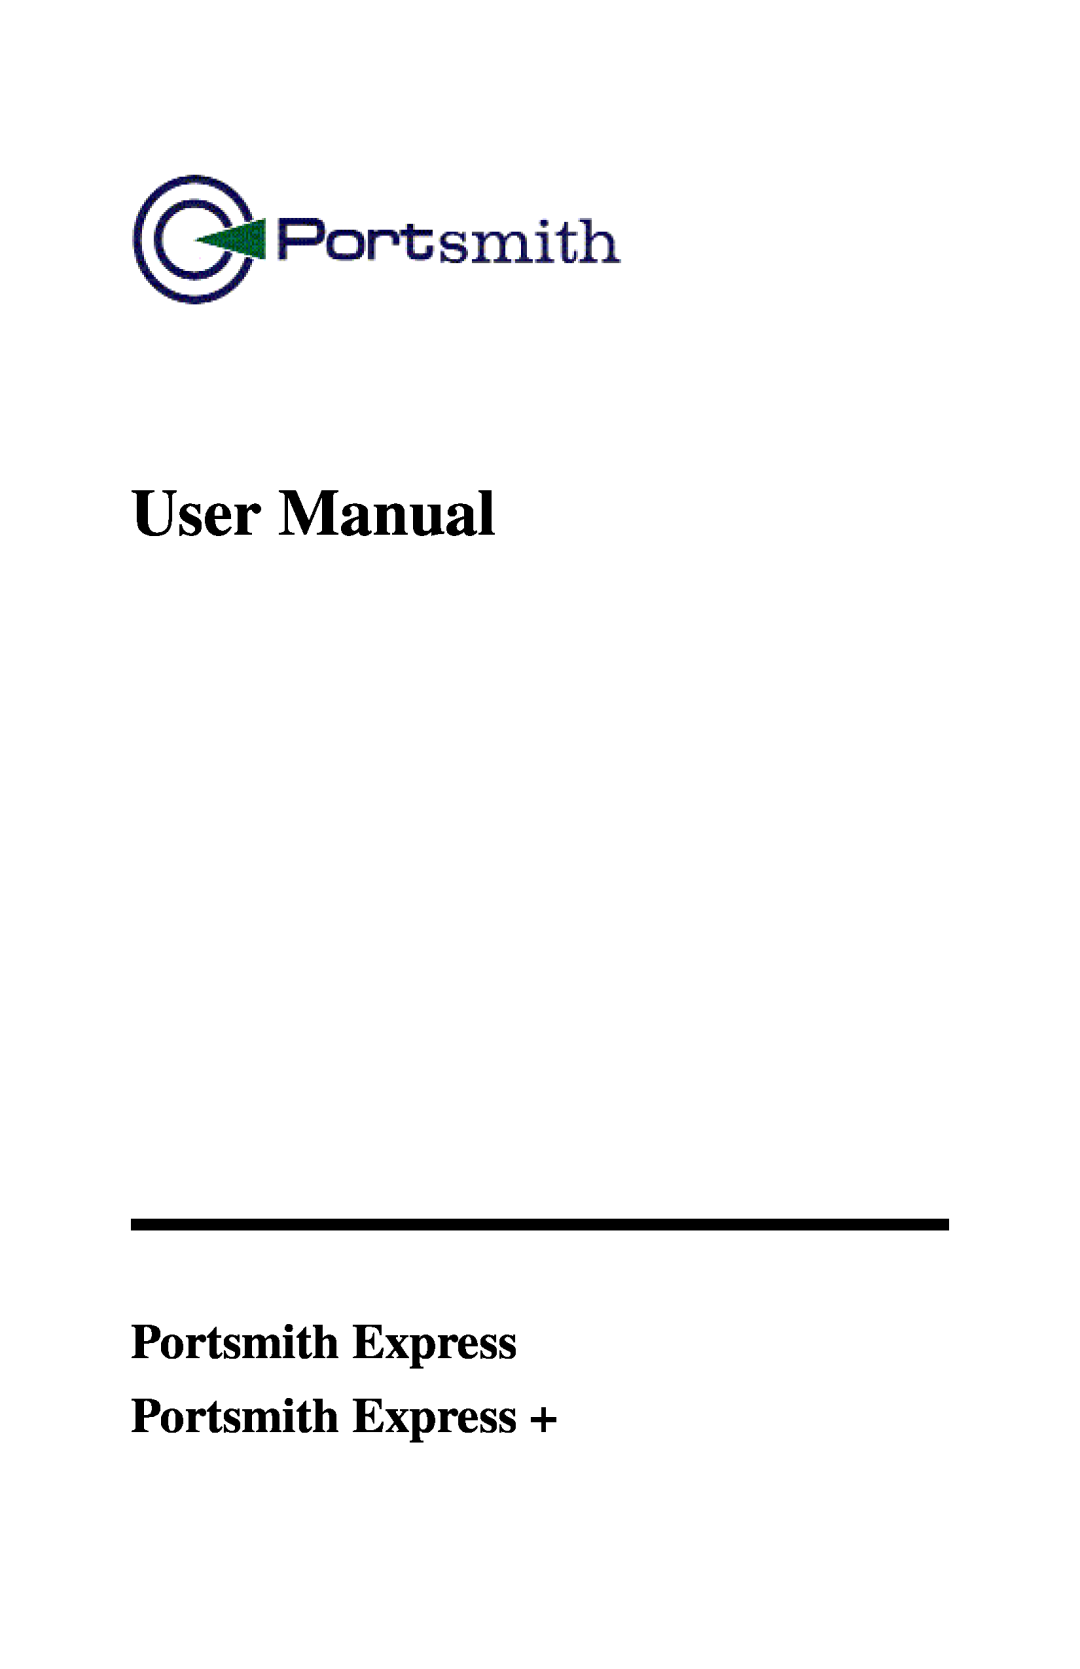 Portsmith USB user manual User Manual, Portsmith Express Portsmith Express + 